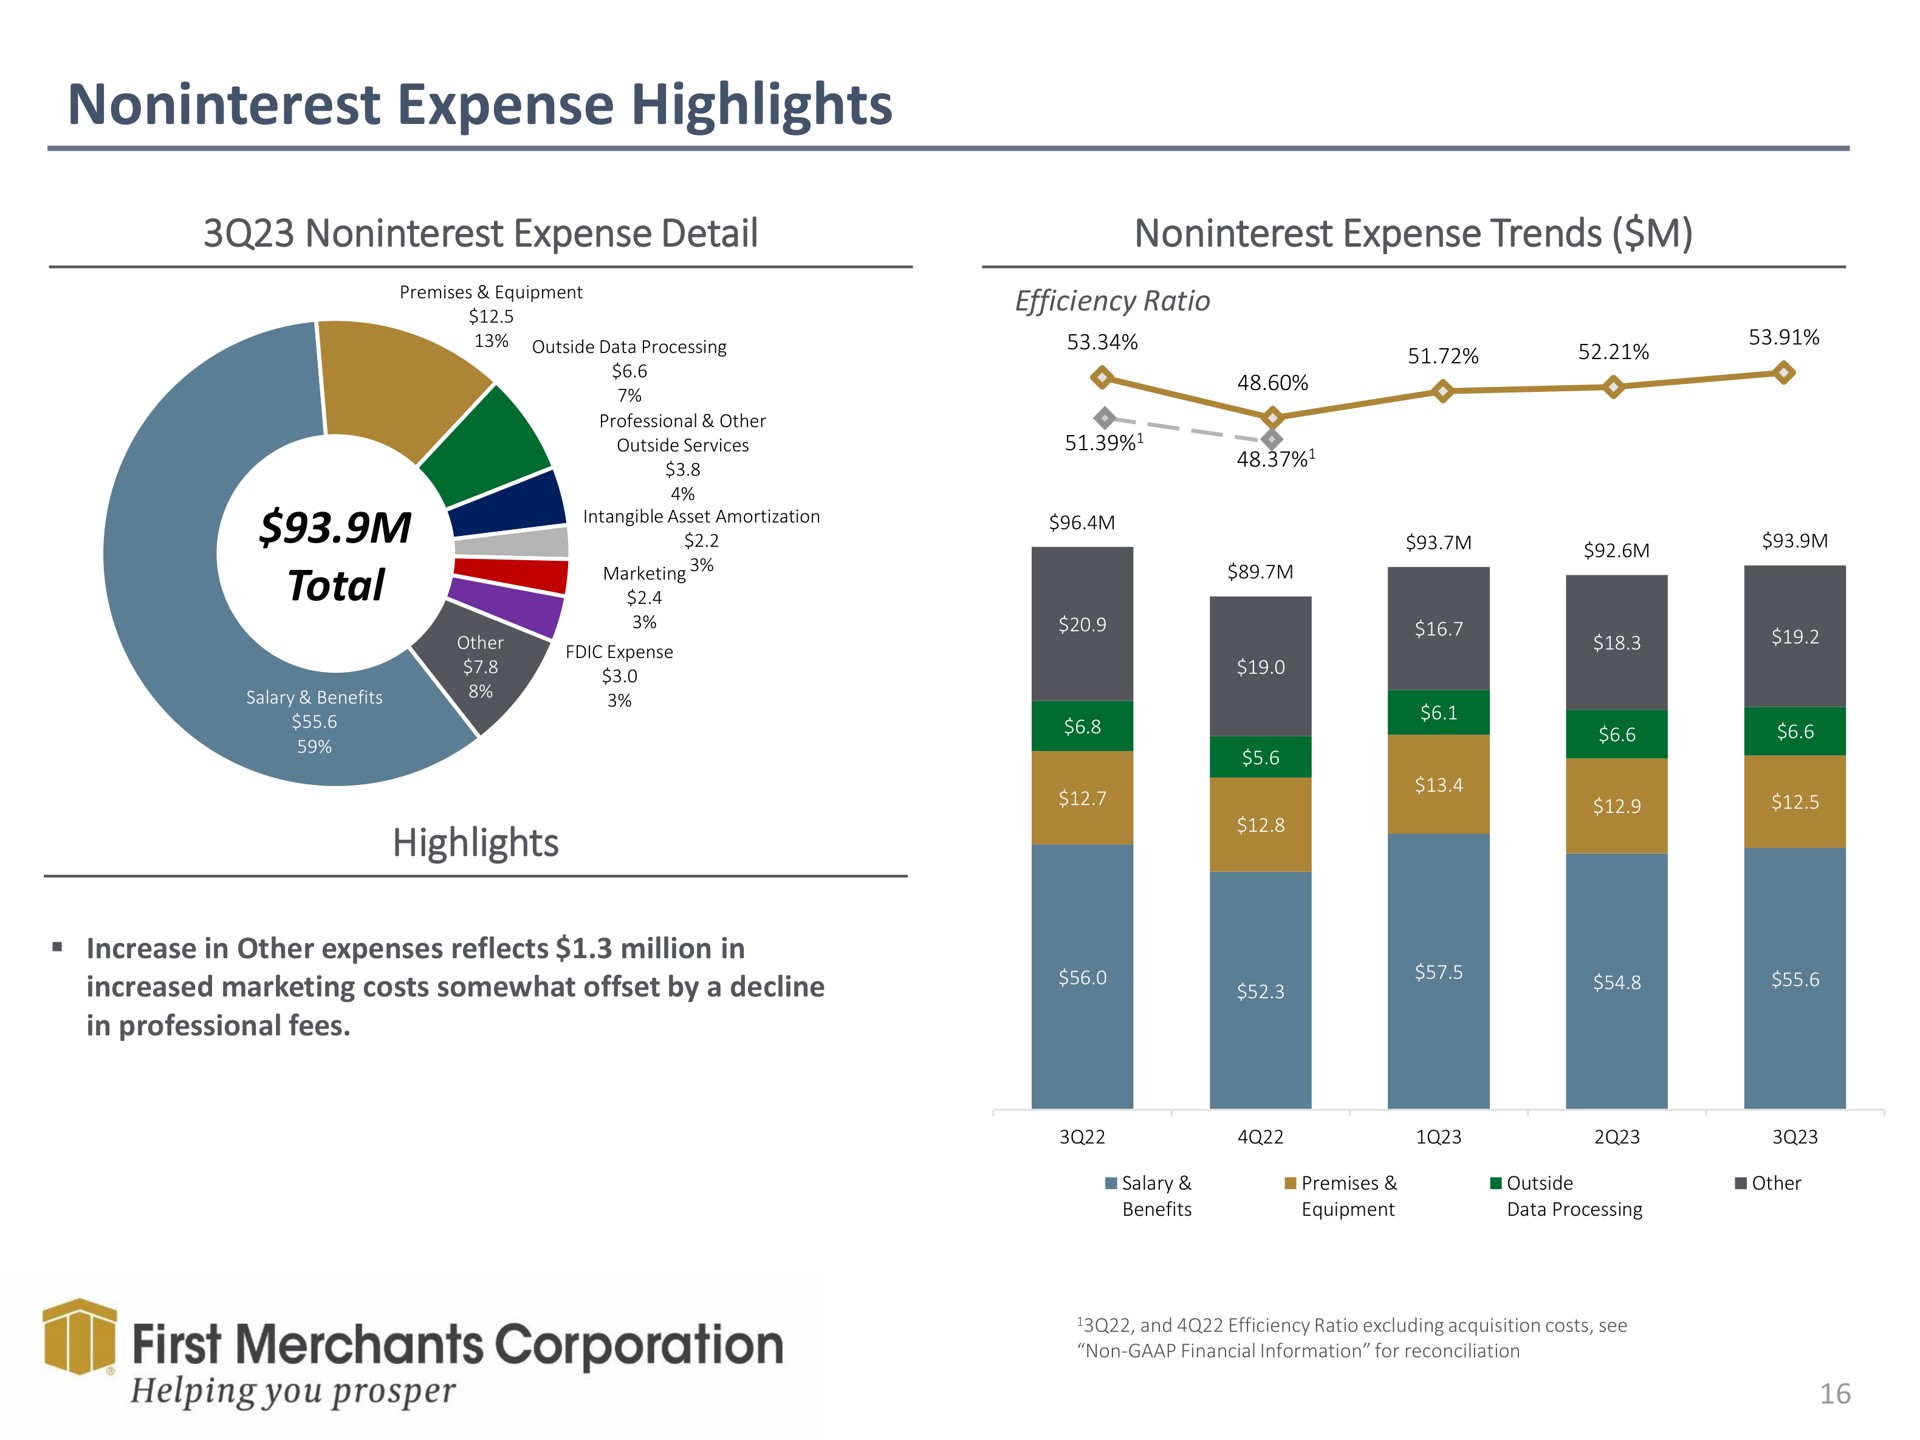 expense highlights expense detail expense trends total highlights first merchants corporation helping you prosper | First Merchants